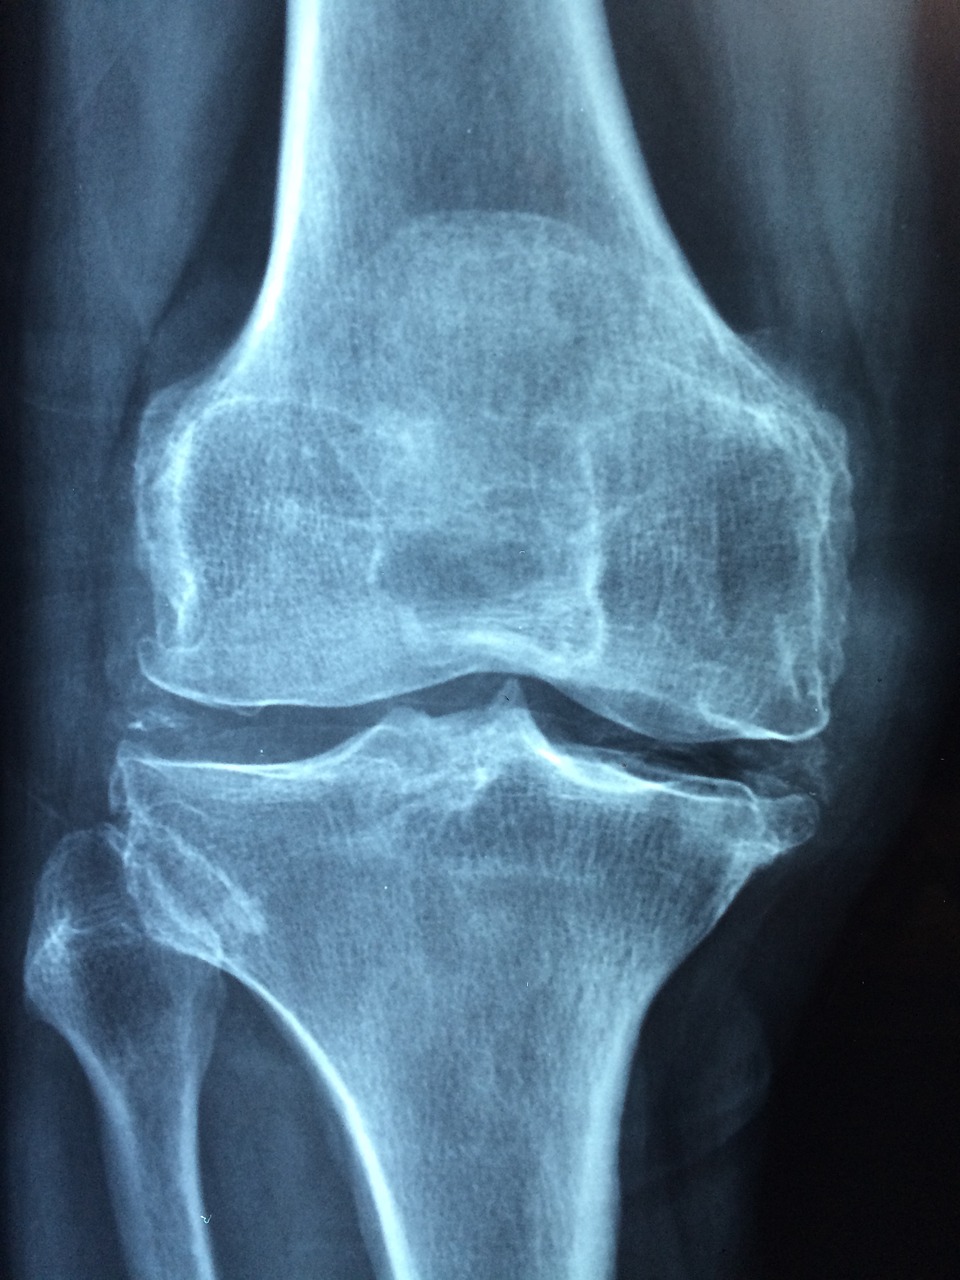 Radio de l'arthrose du genou: quel traitement naturel?